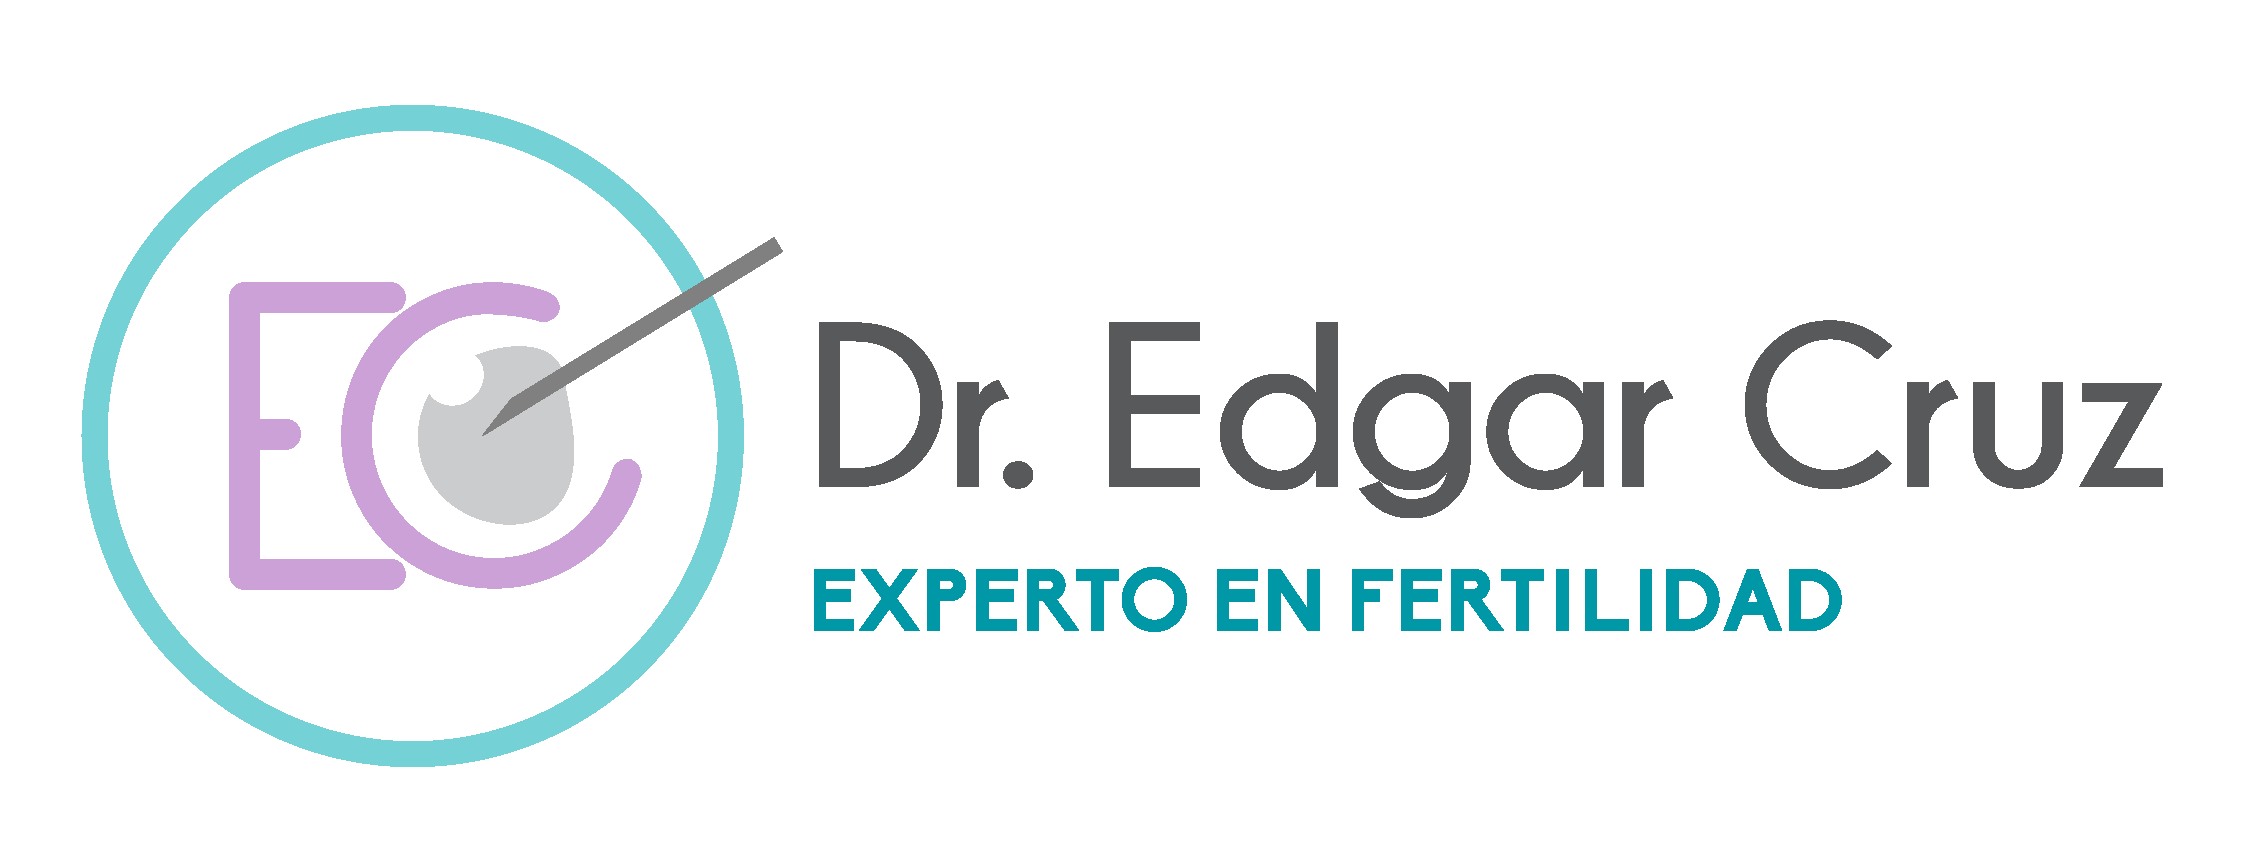 Dr Edgar Cruz